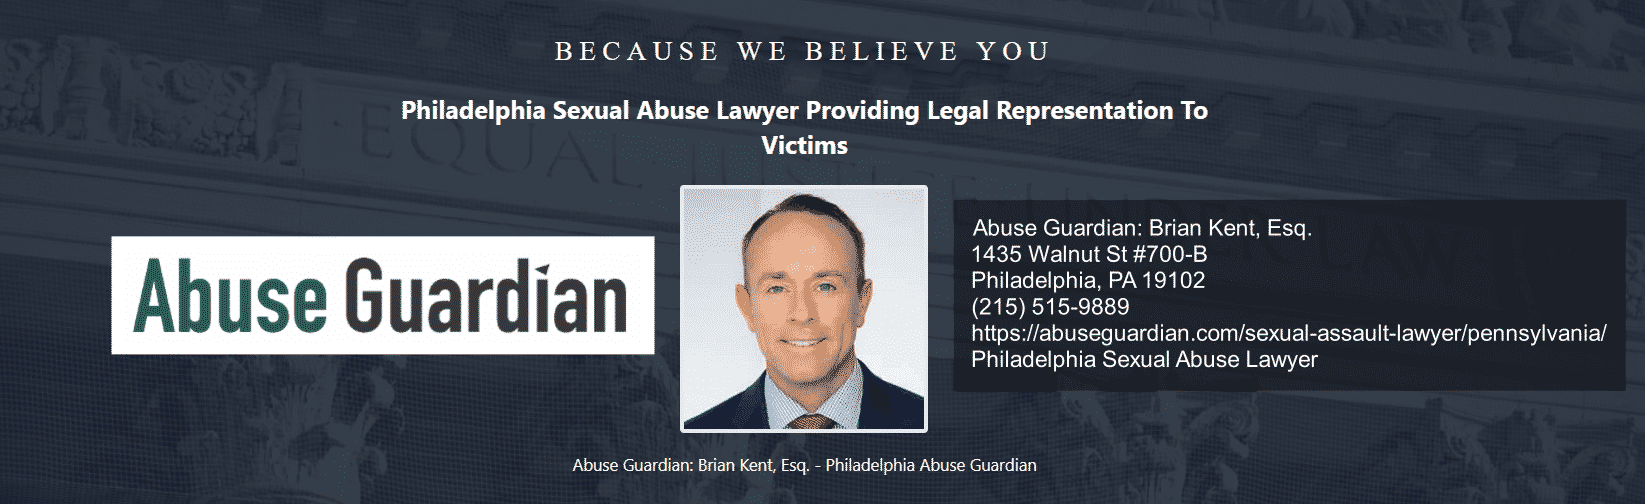 sexual abuse lawyer near me abuse guardian brian kent, esq. philadelphia